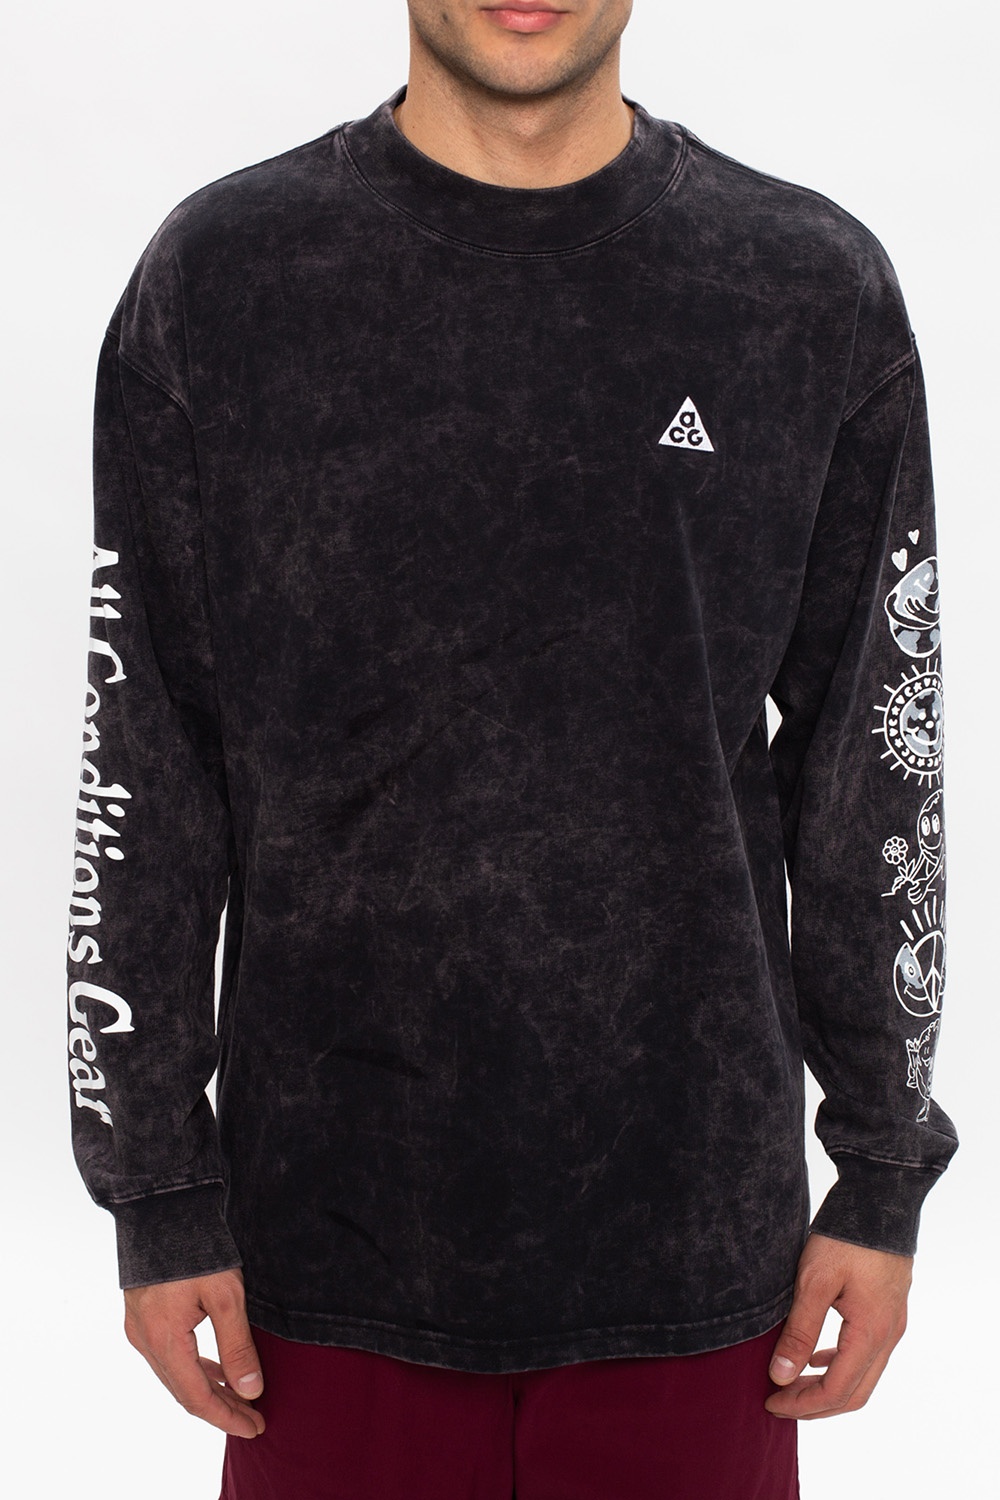 Nike 'ACG' printed sweatshirt | Men's Clothing | Vitkac